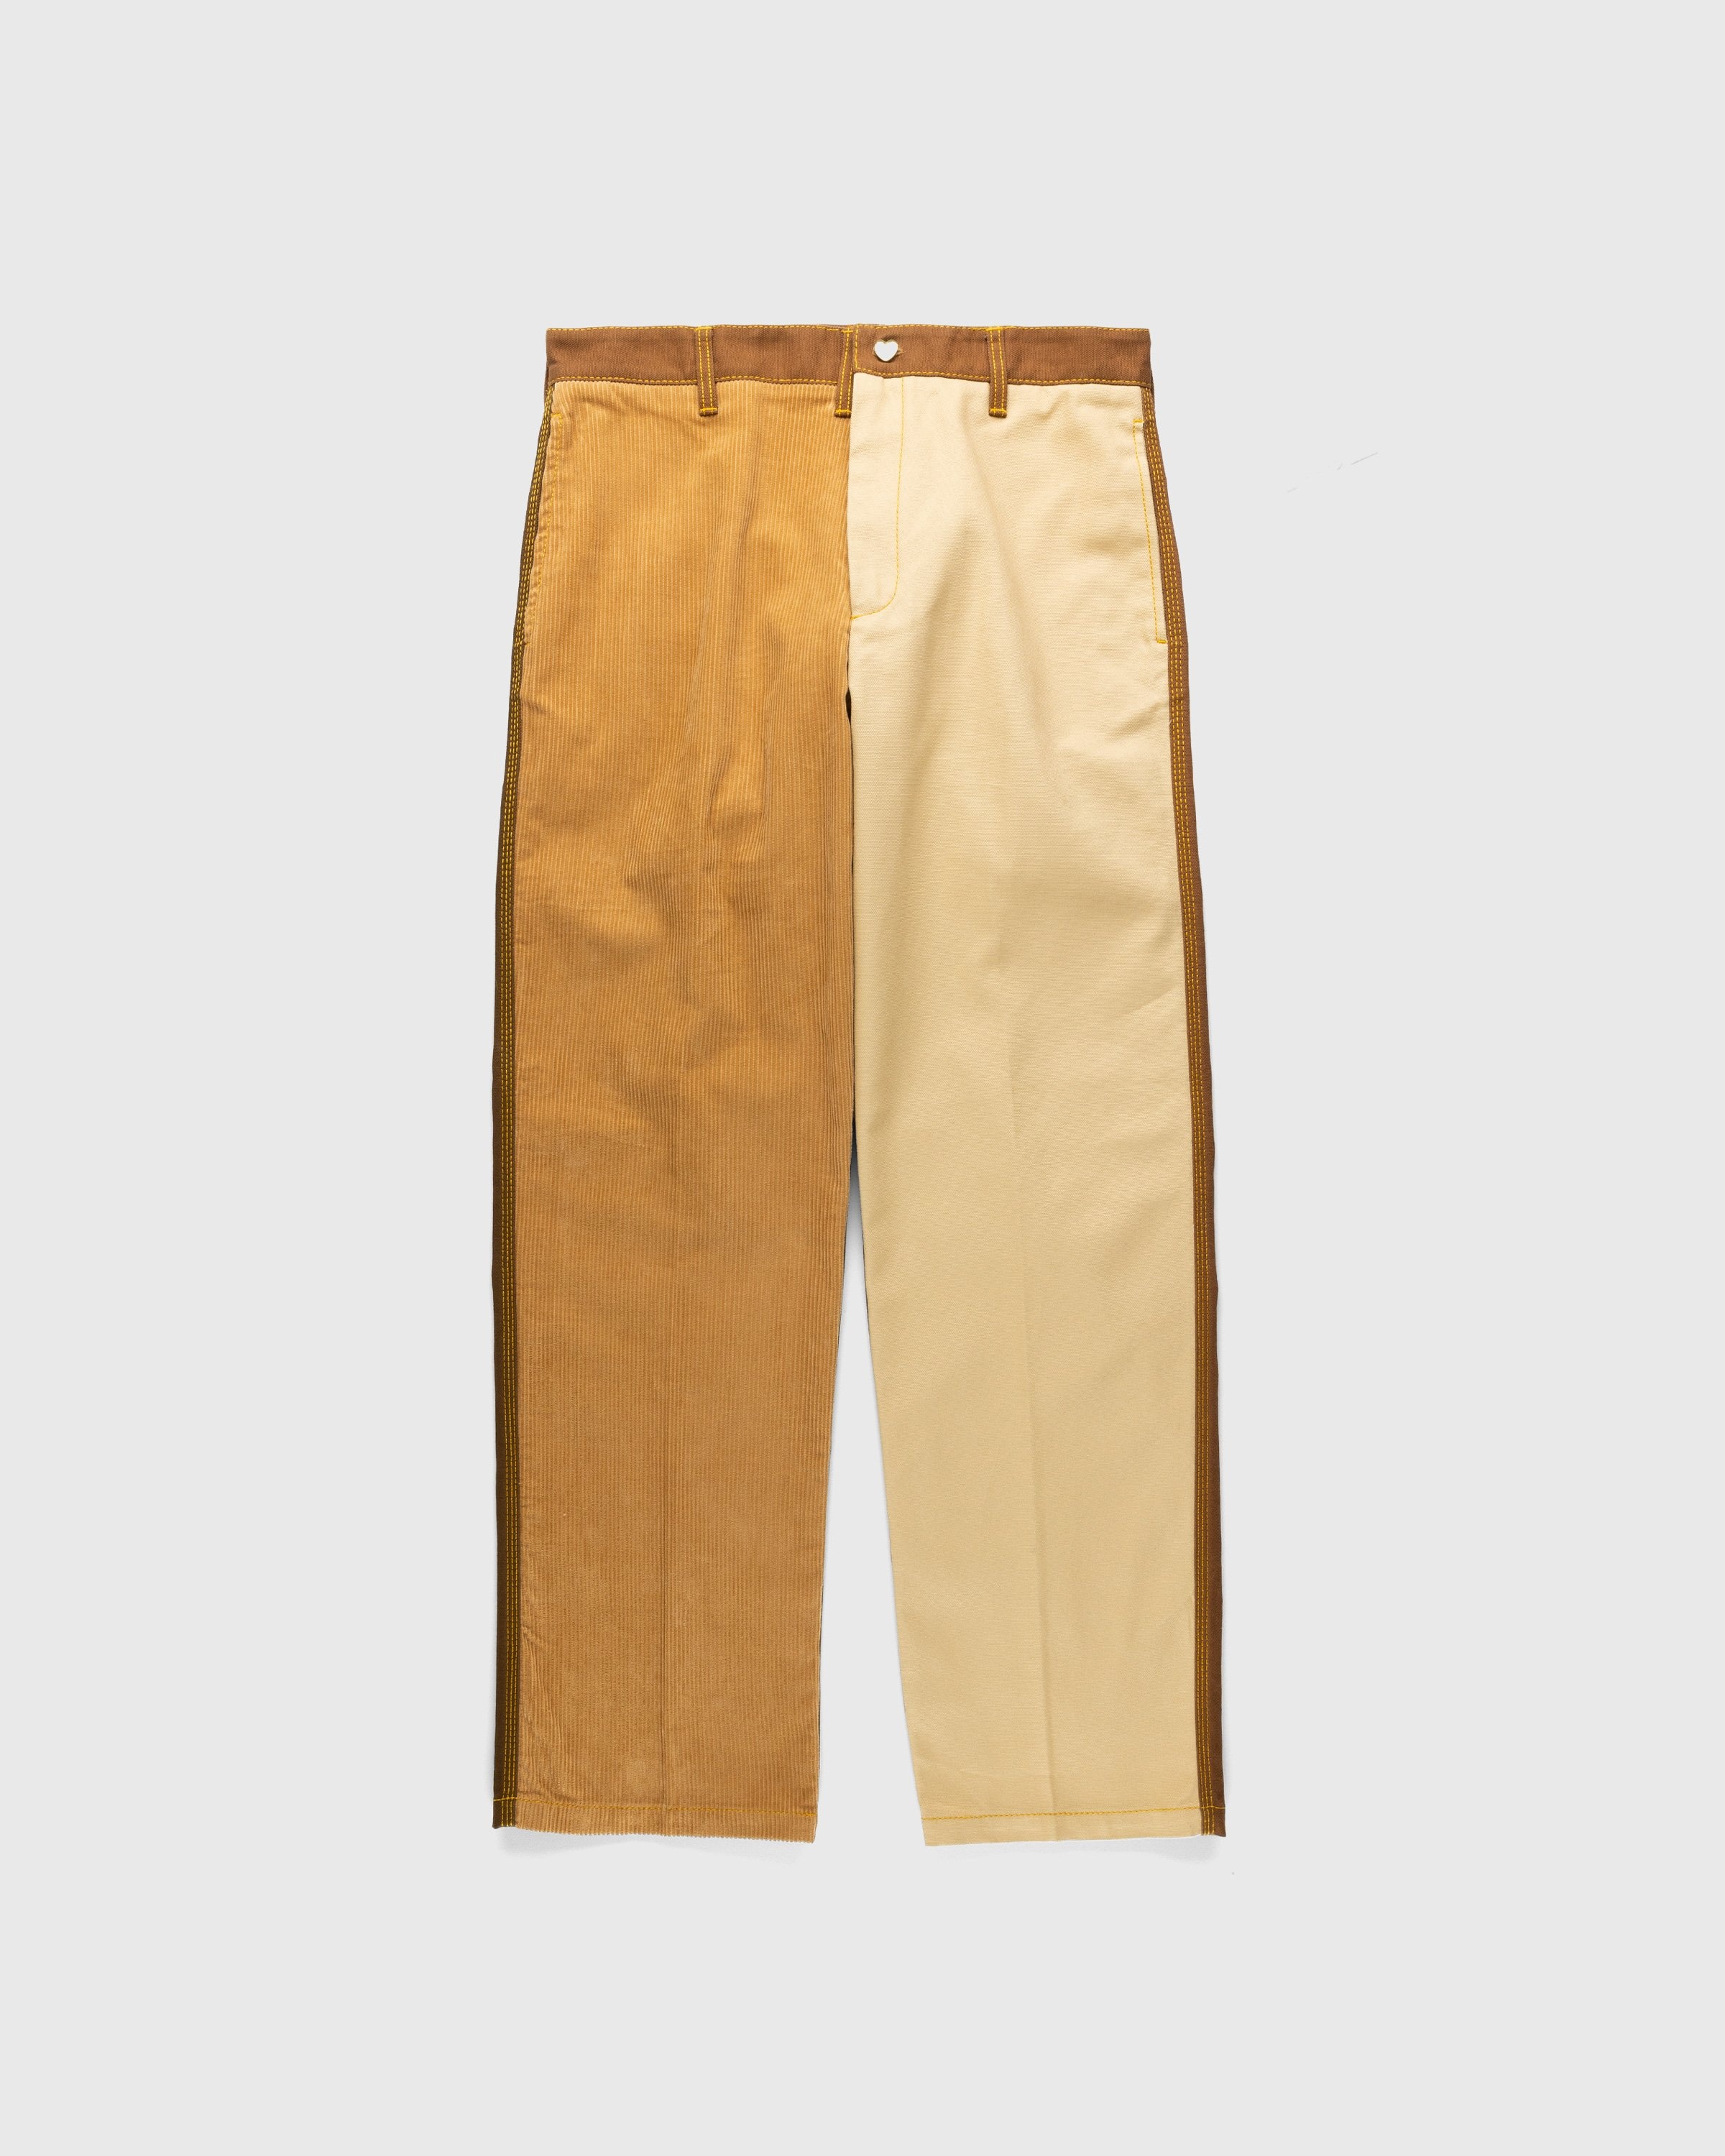 Marni x Carhartt WIP – Colorblocked Trousers Brown - Pants - Brown - Image 1